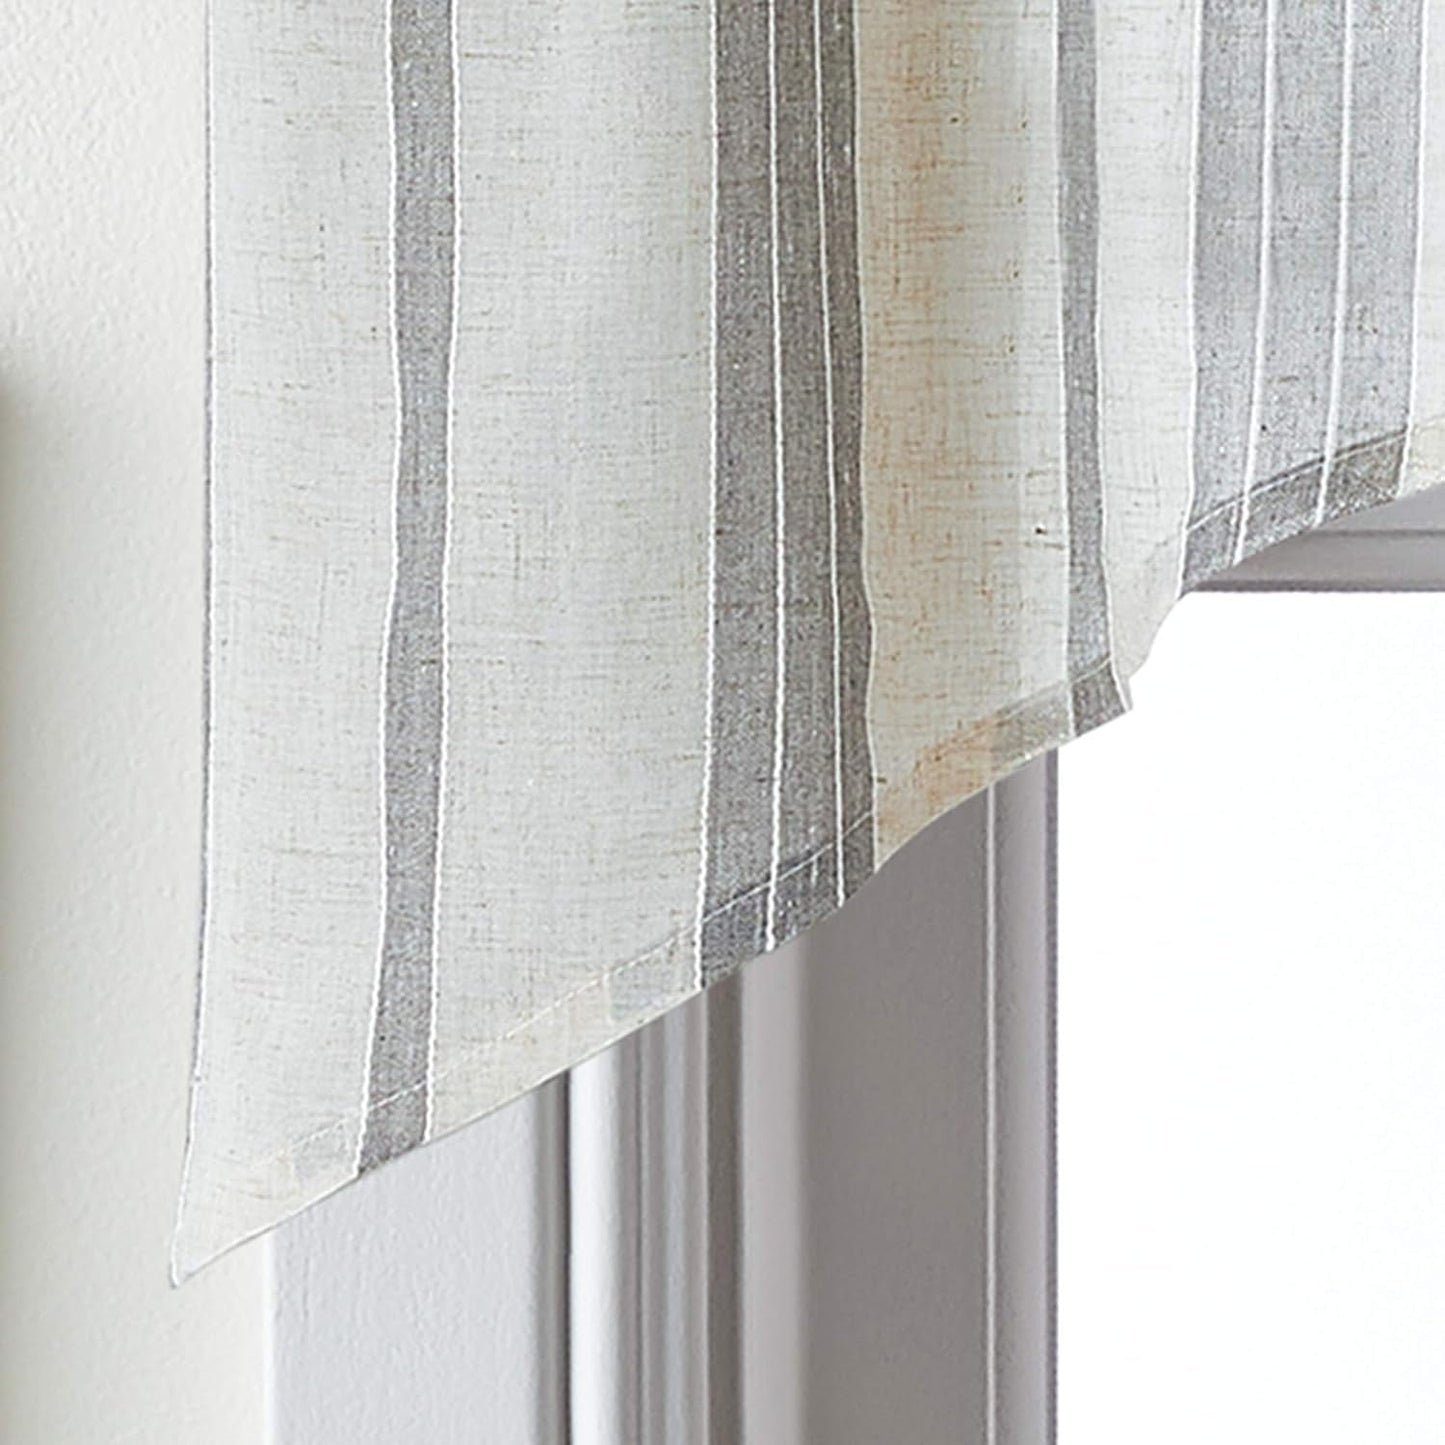 CHF Mckenzie Striped Window Kitchen Curtain Swag Pair, Rod Pocket, 27W X 30L Inch, Grey (Grey, 30-Inch Swag Pair)